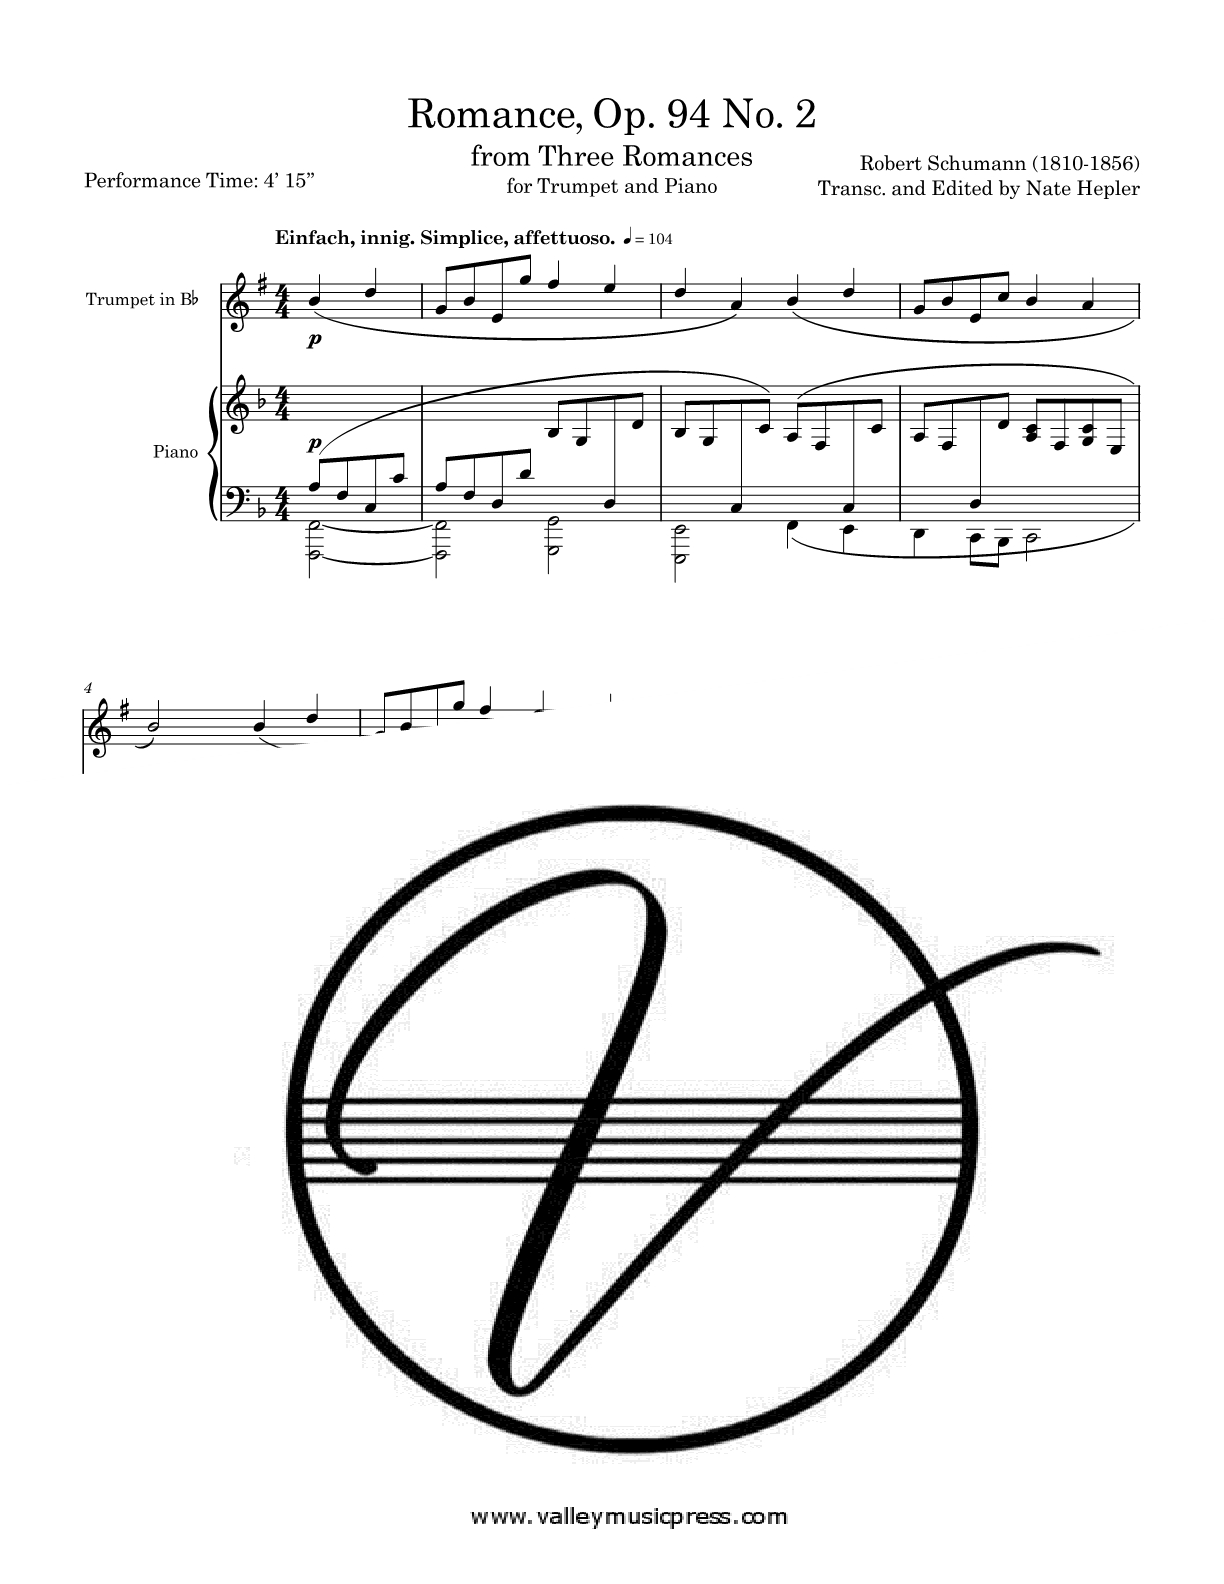 Schumann - Romance in A Major Op. 94 No. 2 (Trumpet & Piano)